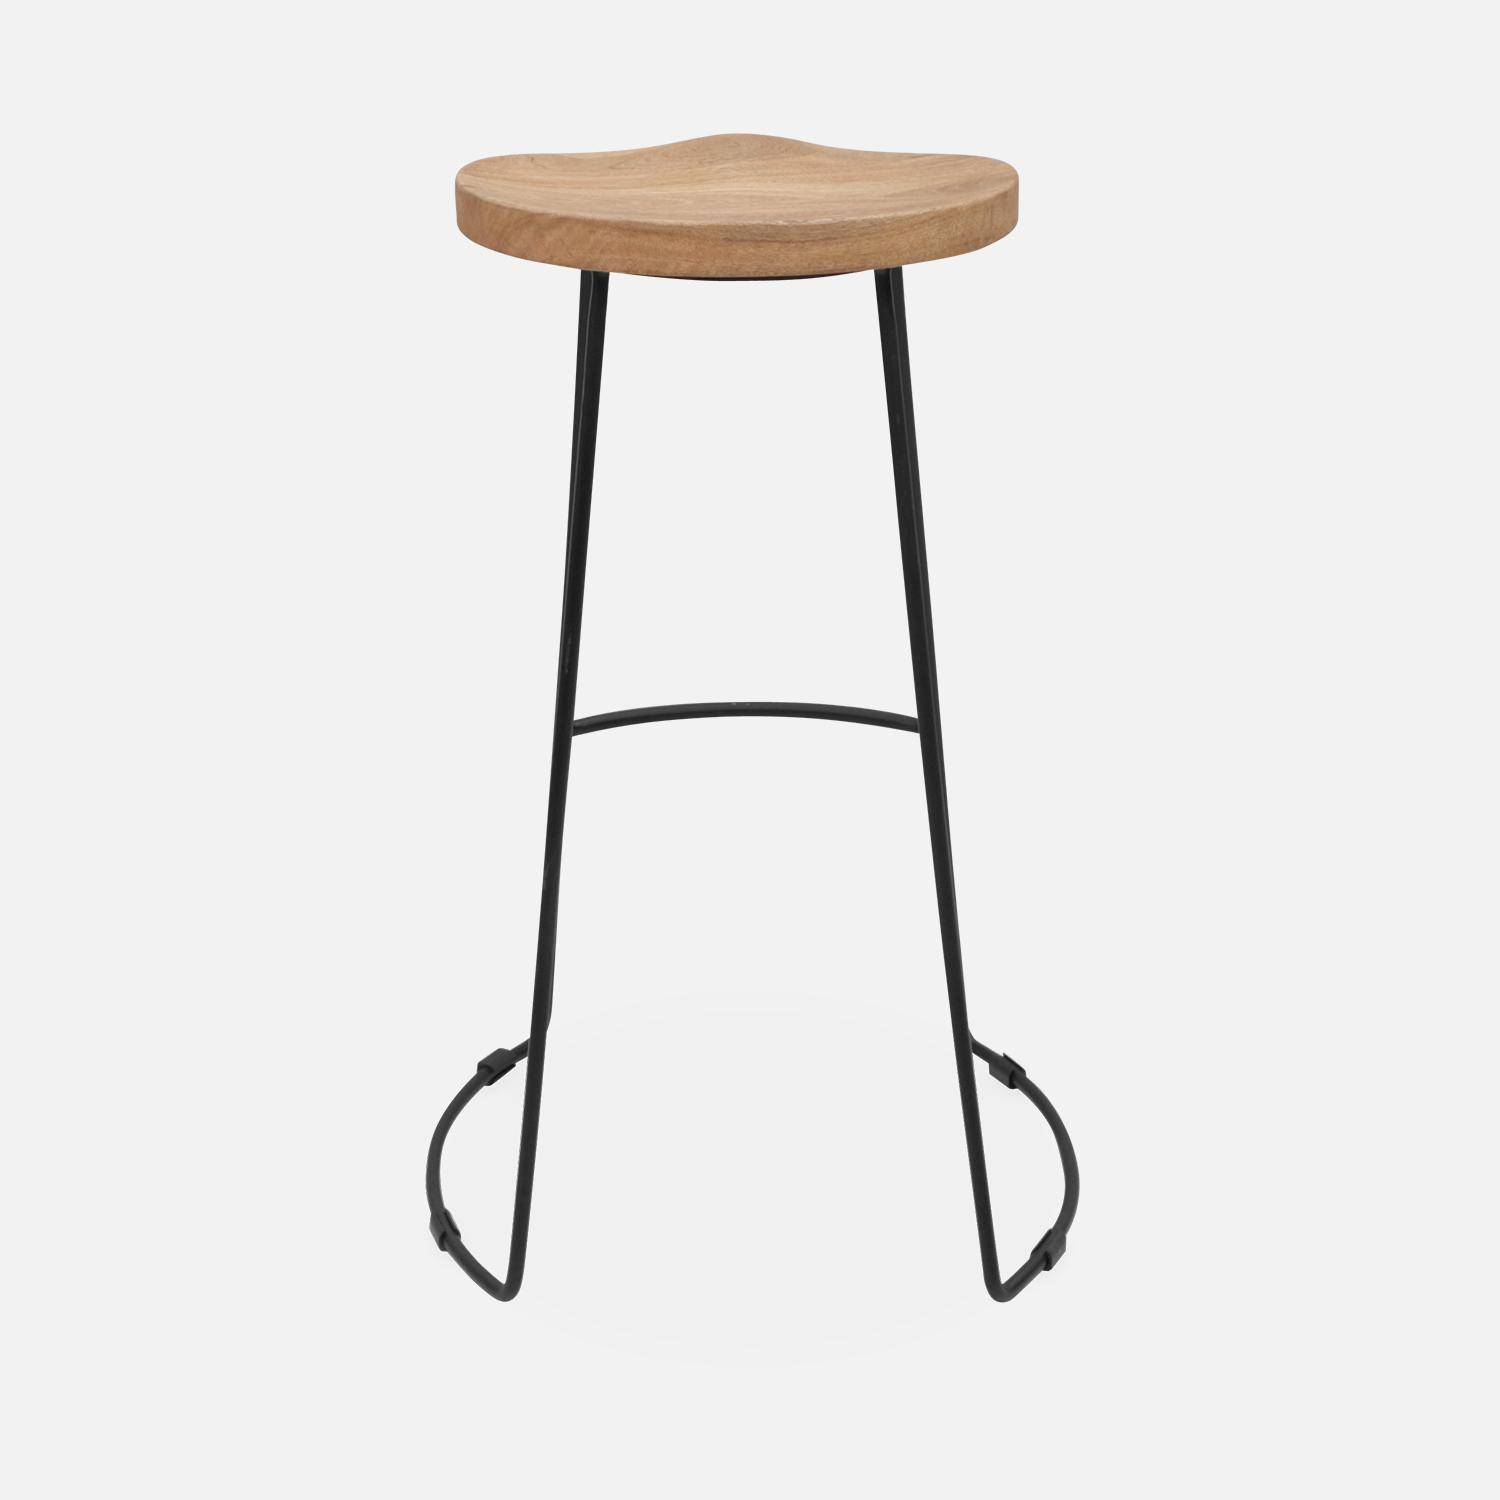 Set of 4 industrial metal and wooden bar stools, 47x40x75cm, Jaya, Mango wood seat, black metal legs Photo6